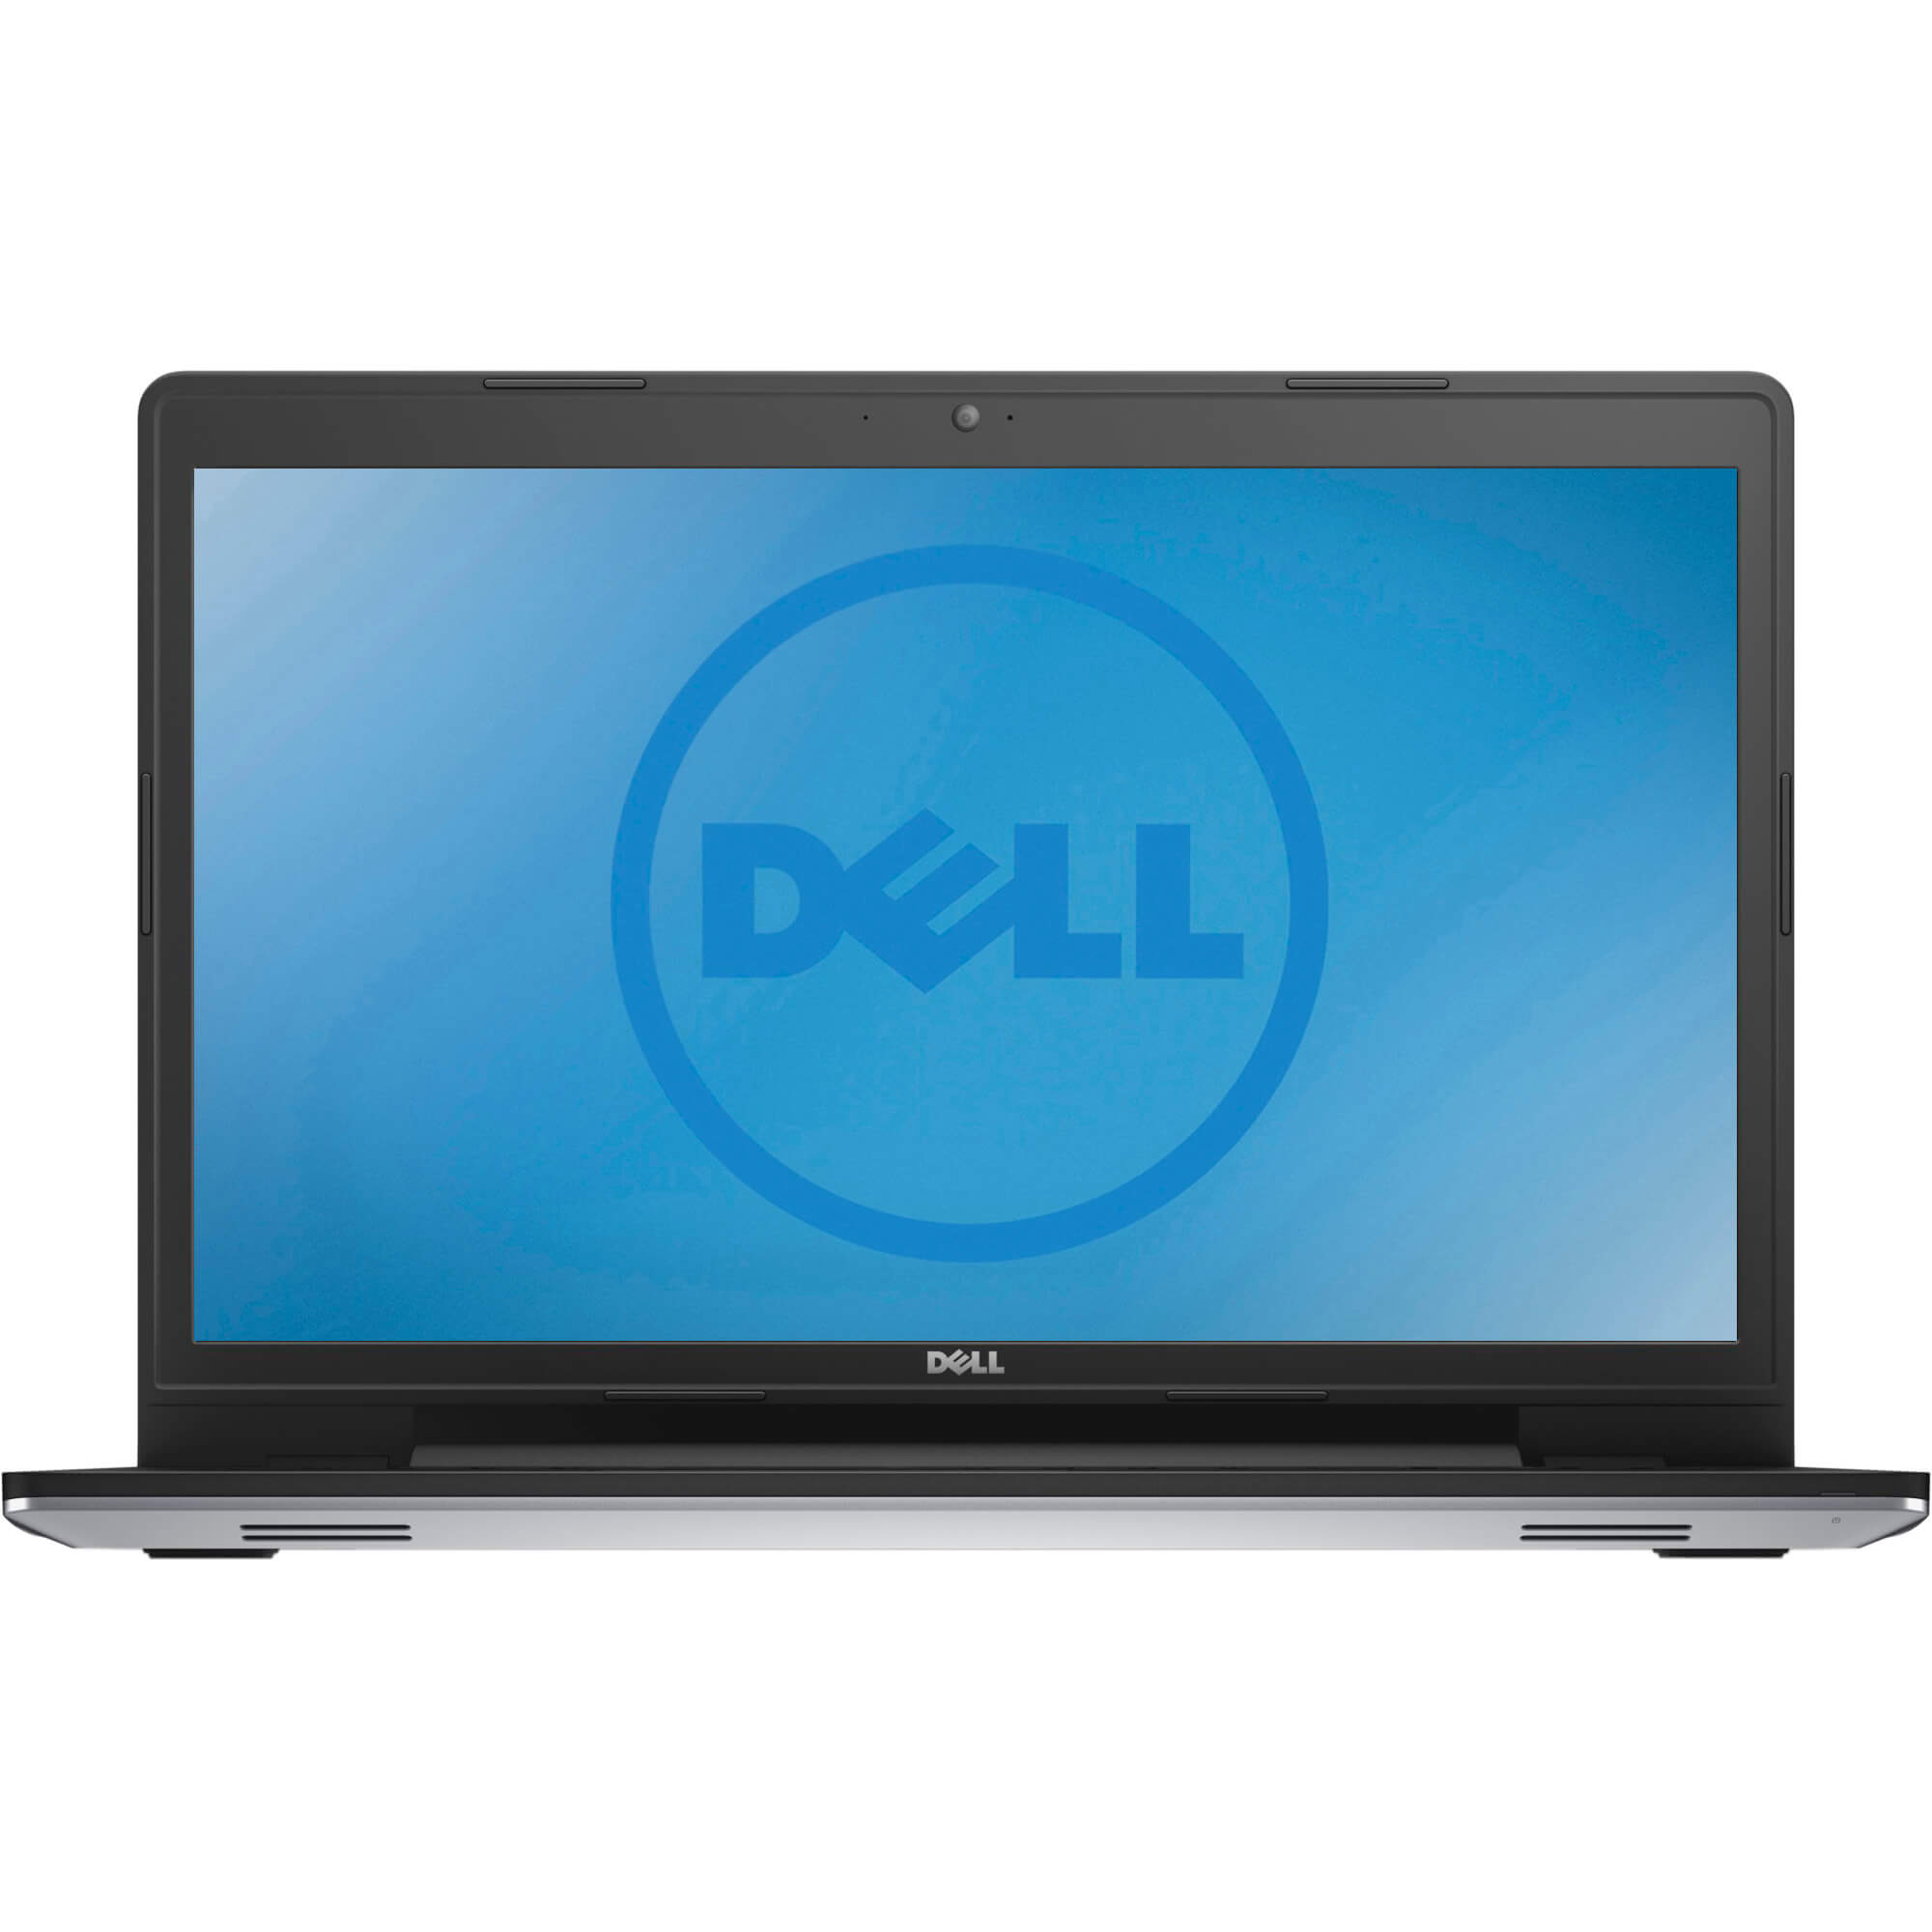  Laptop Dell Inspiron 5749, Intel Core i7-5500U, 8GB DDR3, HDD 1TB, nVidia GeForce 840M 2GB, Linux 